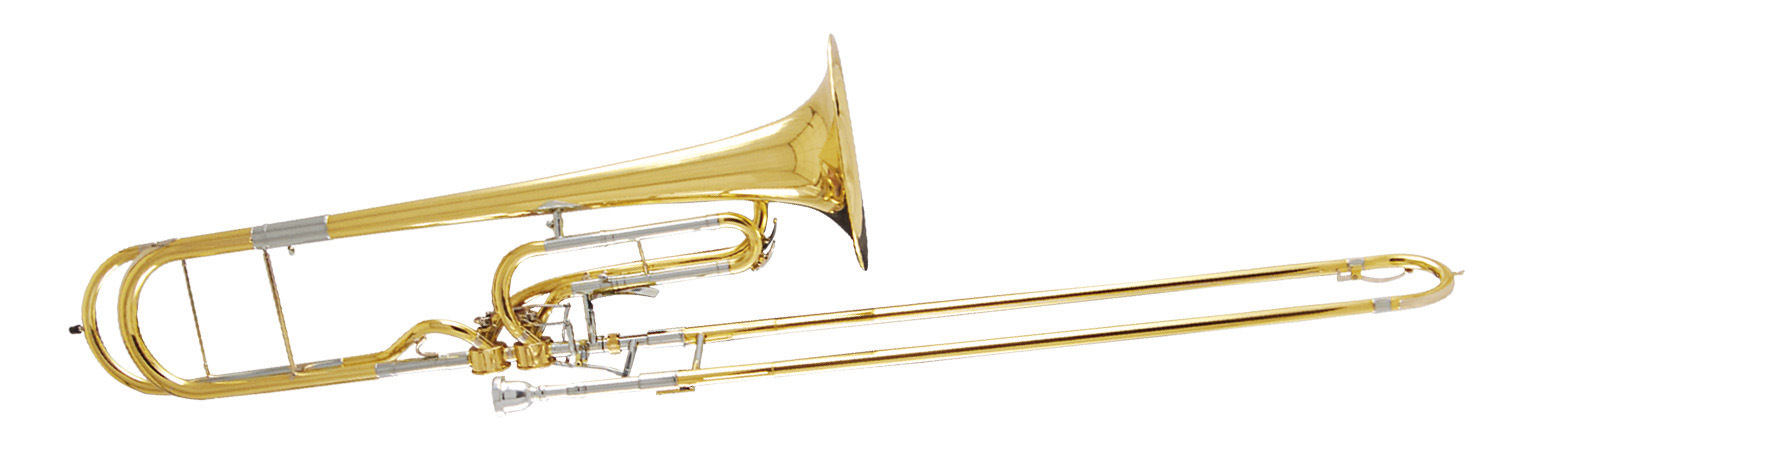 F Key Contrabass Trombone (TB-1850)